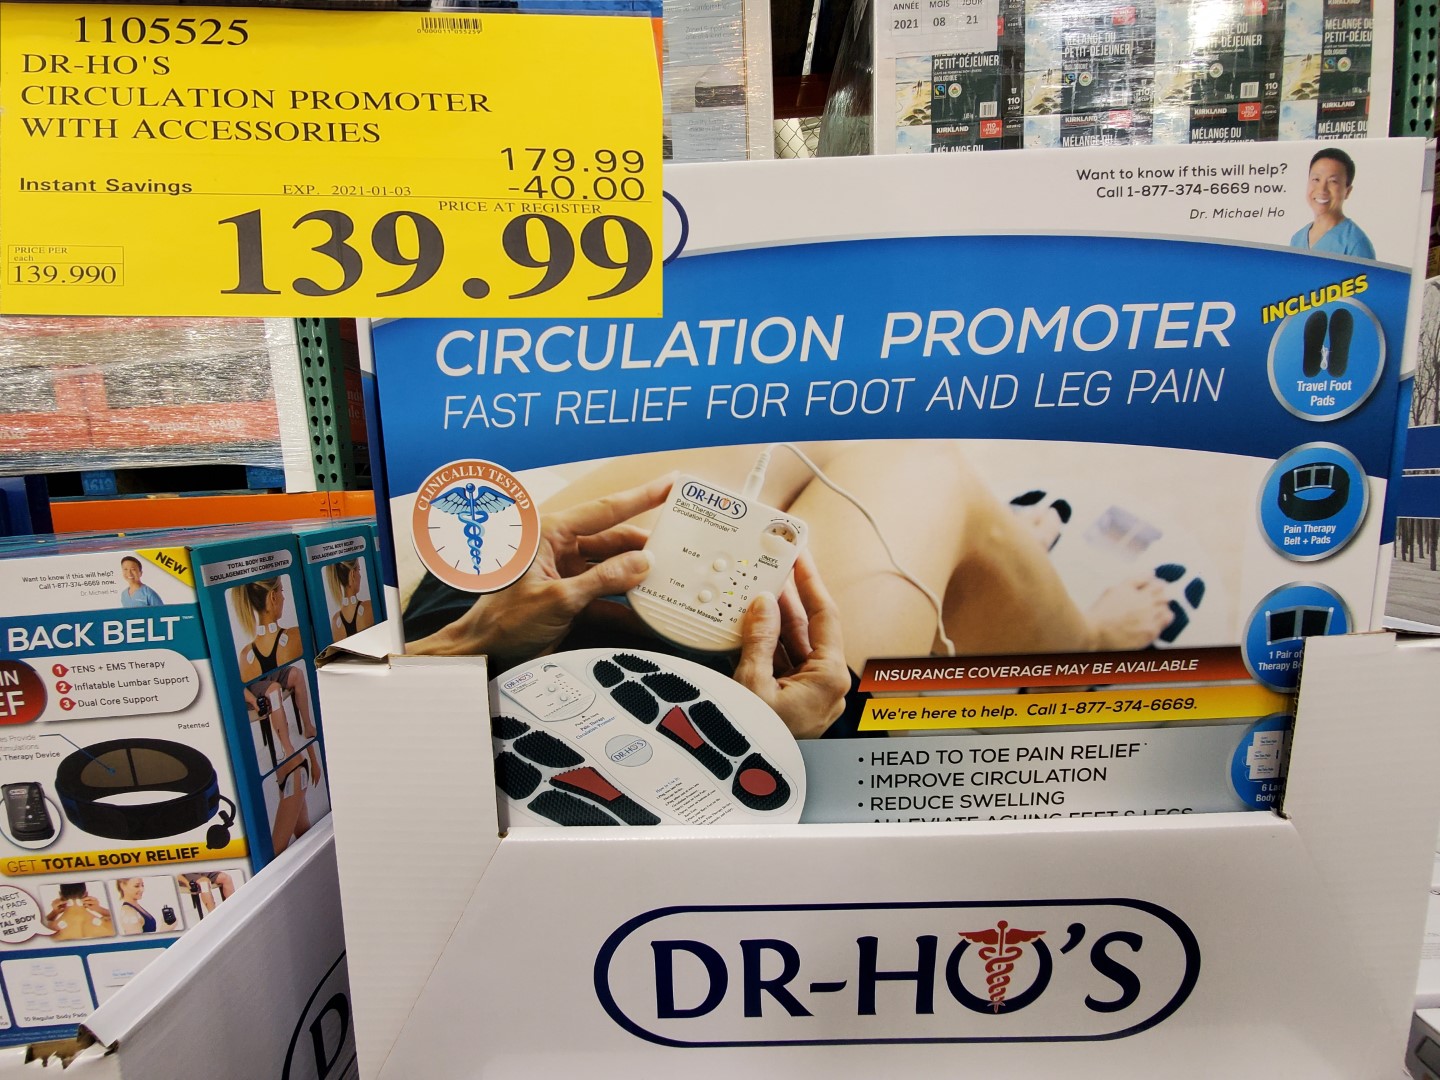 dr.ho's circulation promoter